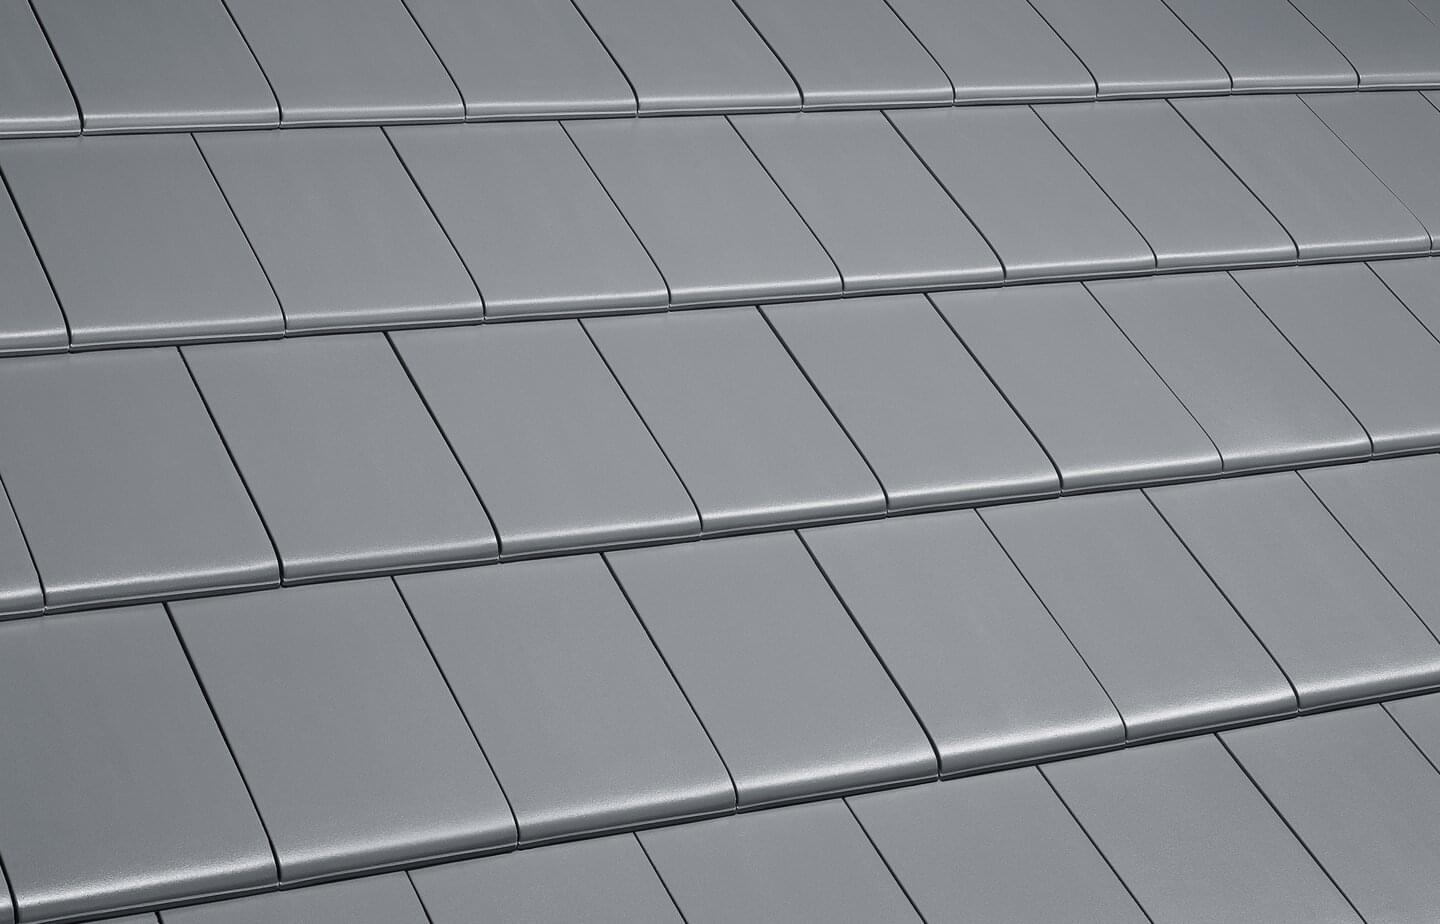 Linea® - Sinter ligth grey | Image roof surface | © © ERLUS AG 2021